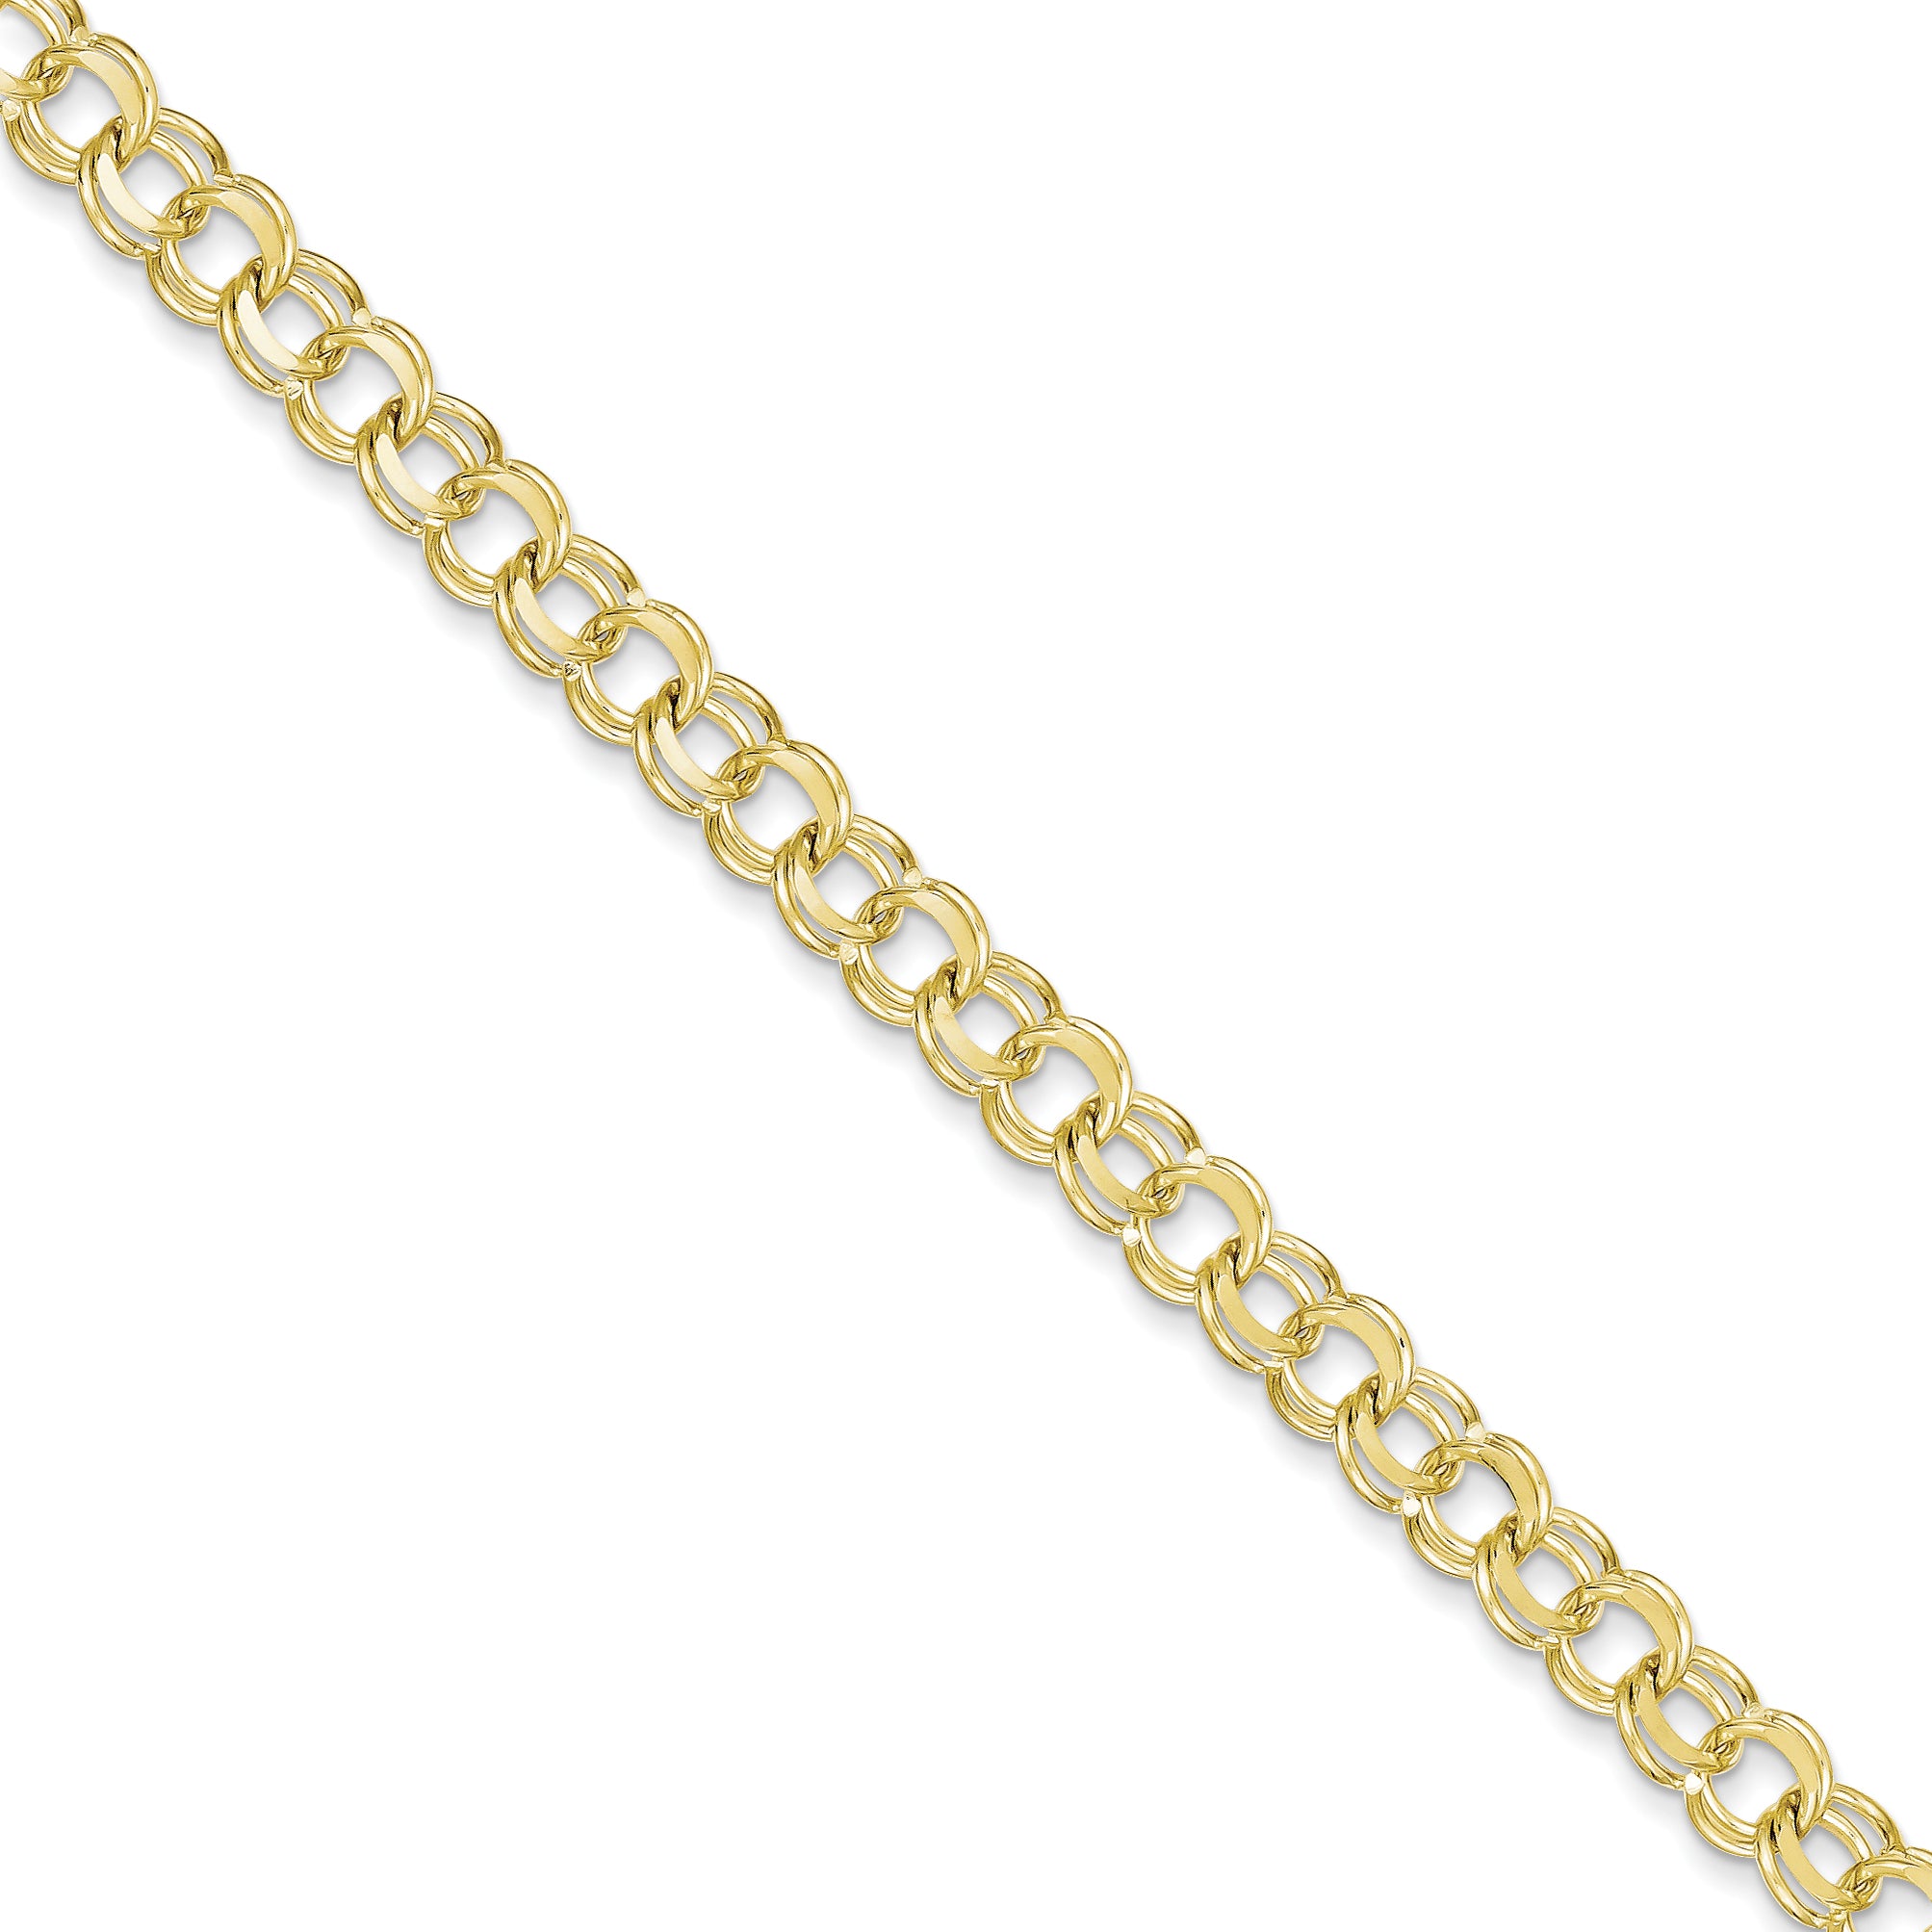 10K Solid Double Link Charm Bracelet